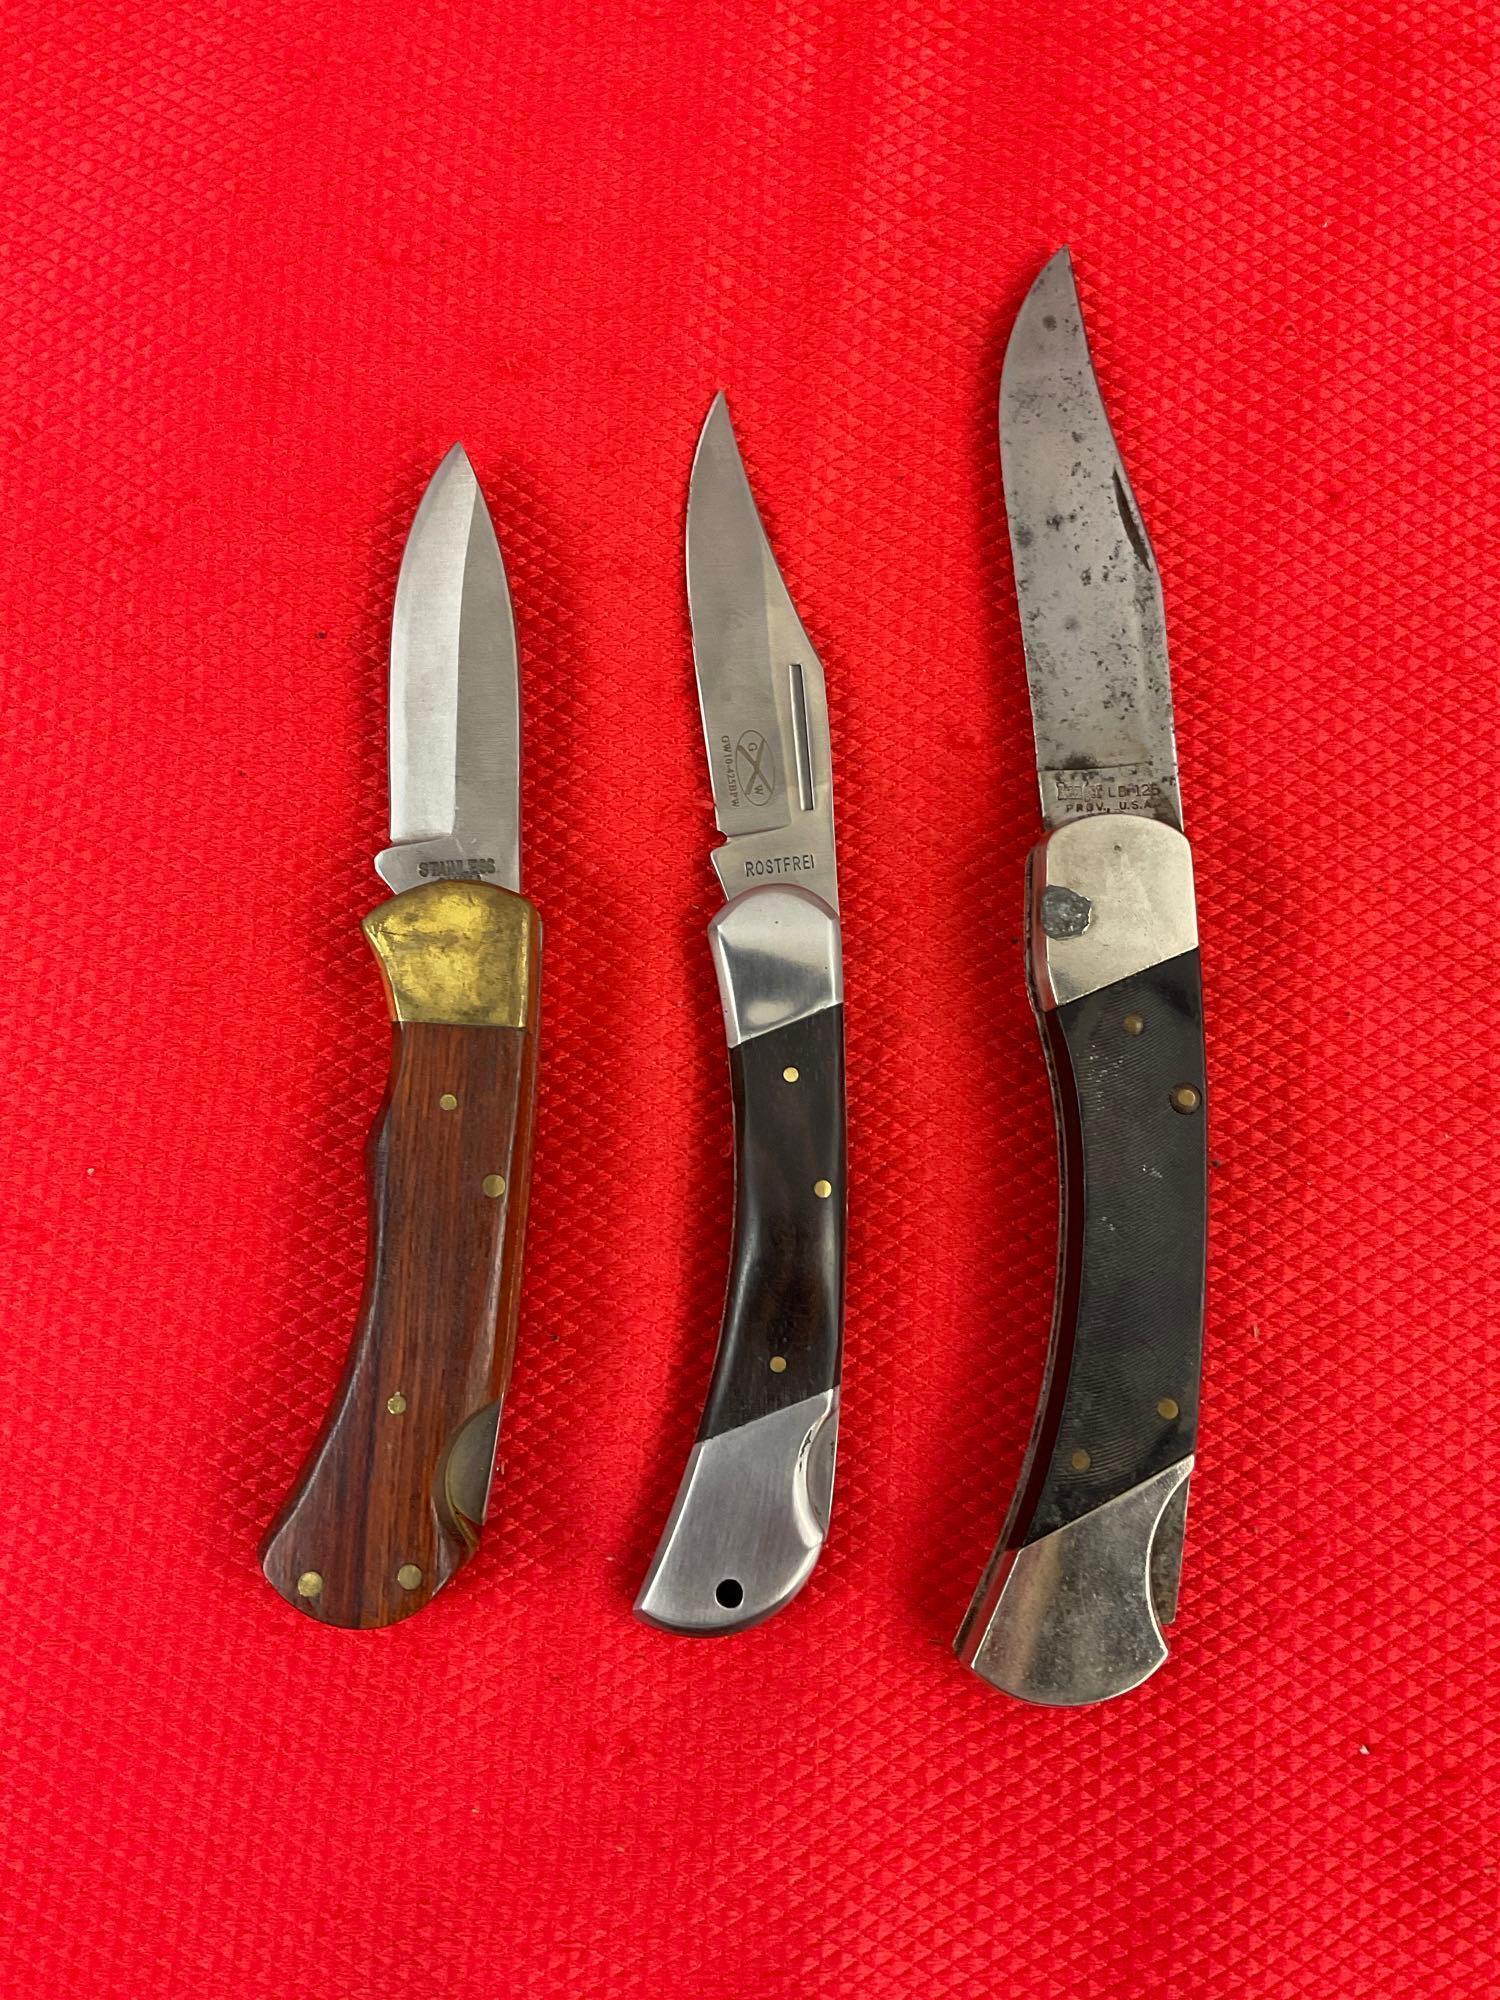 3 pcs Steel Folding Blade Pocket Knives. Vintage Ranger Prov. LB-125 w/ Original Sheath. See pics.